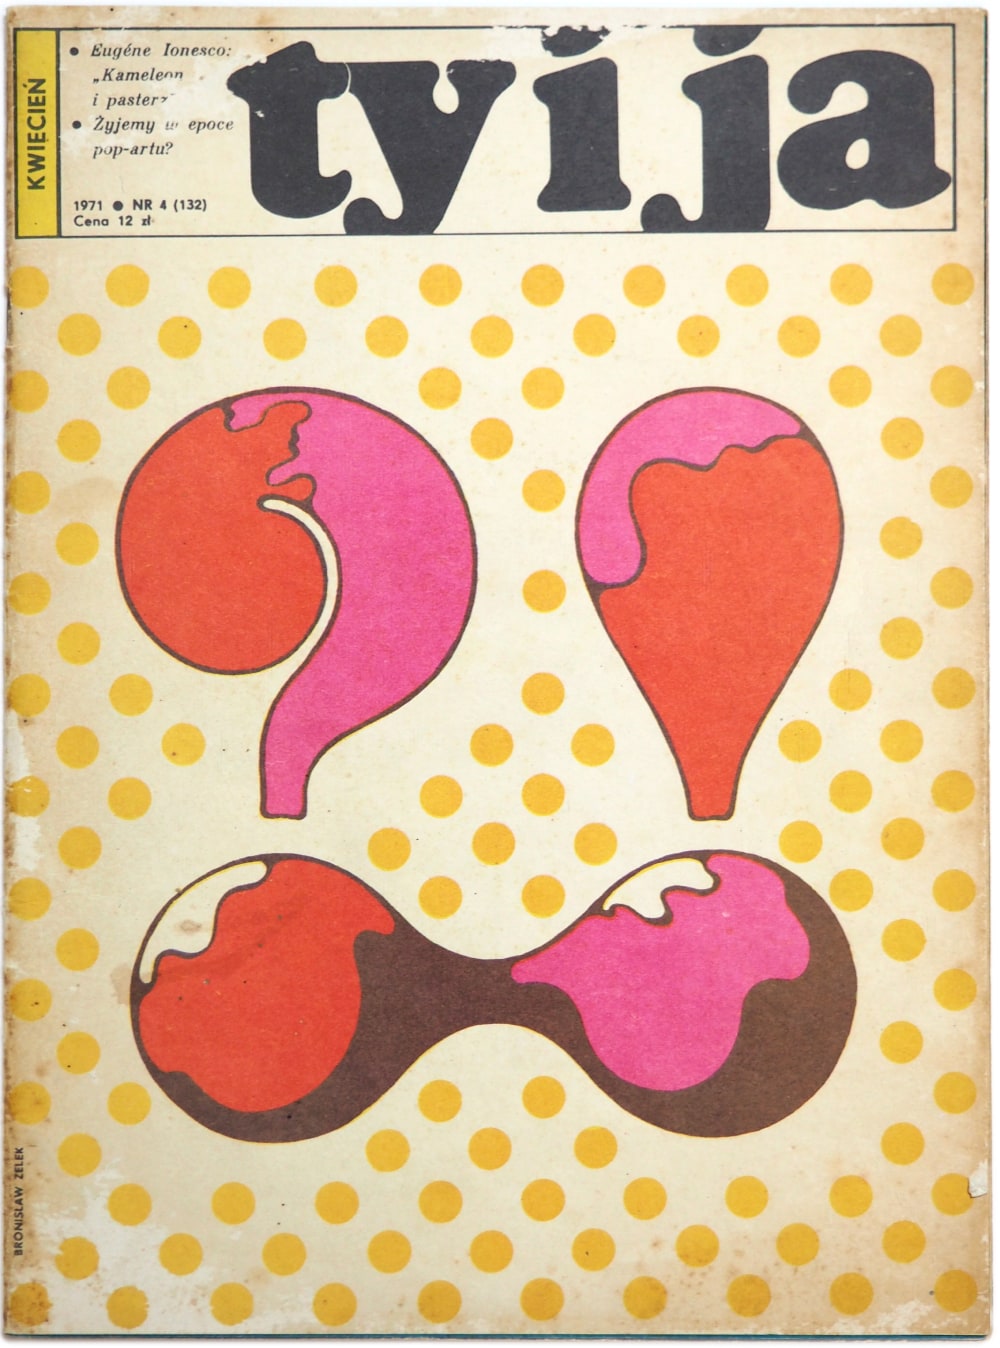 Projekt okładki magazynu “Ty i ja”, 1971, archiwum Zelka